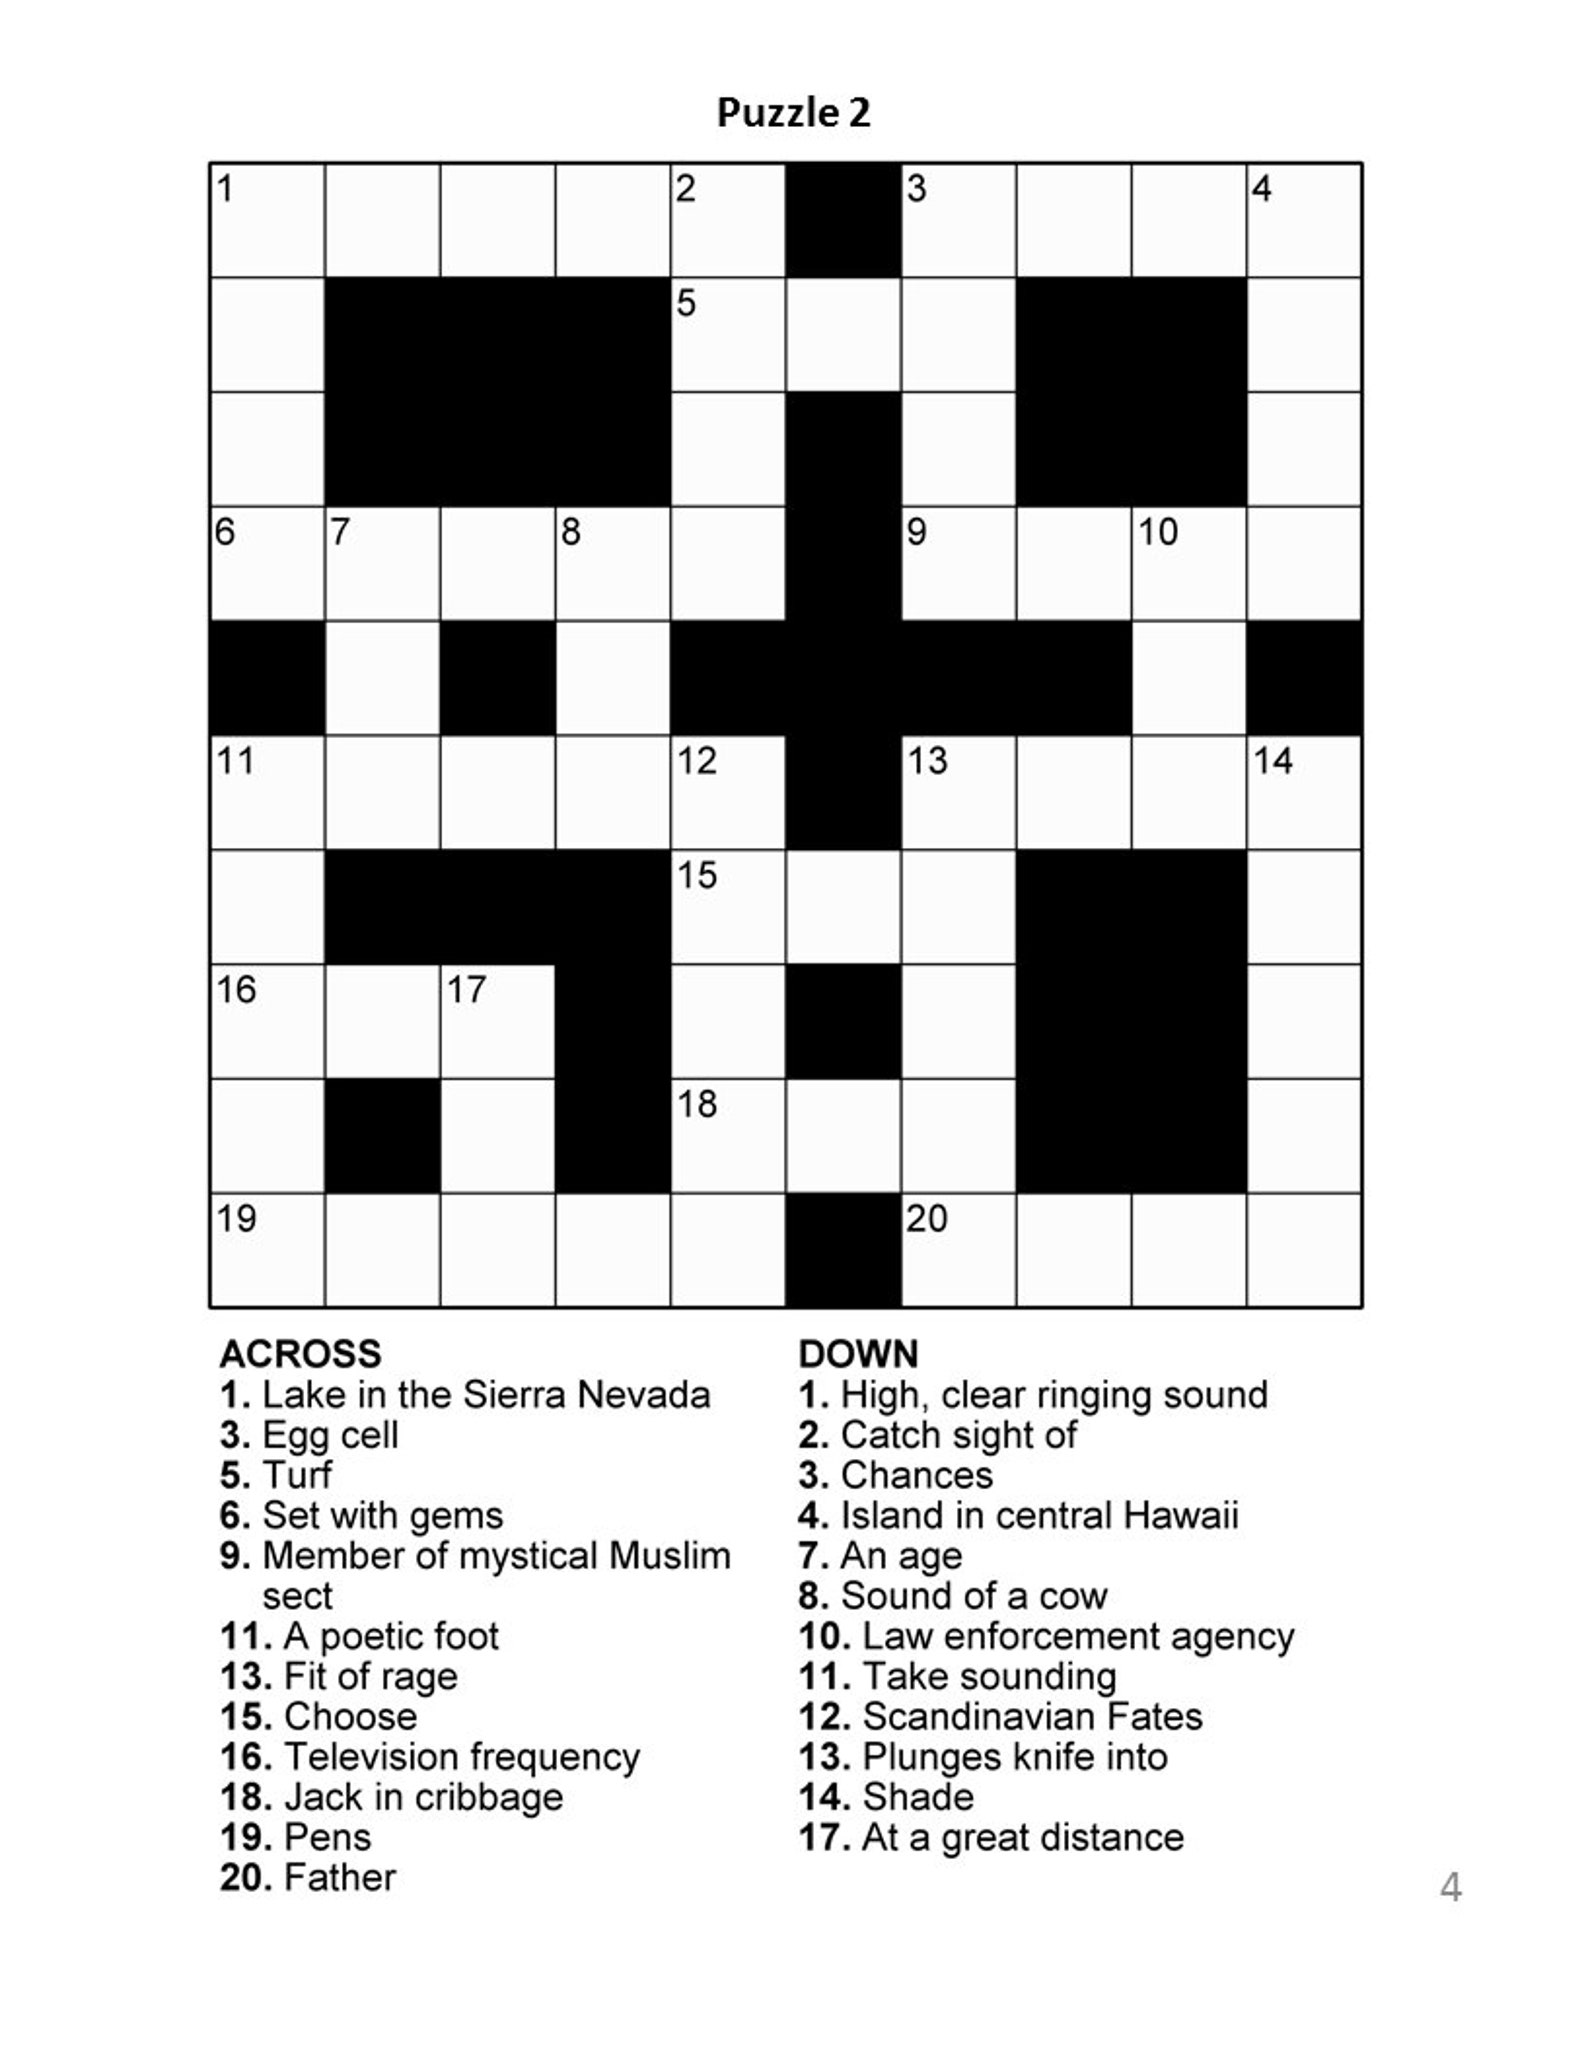 plight-of-the-1-crossword